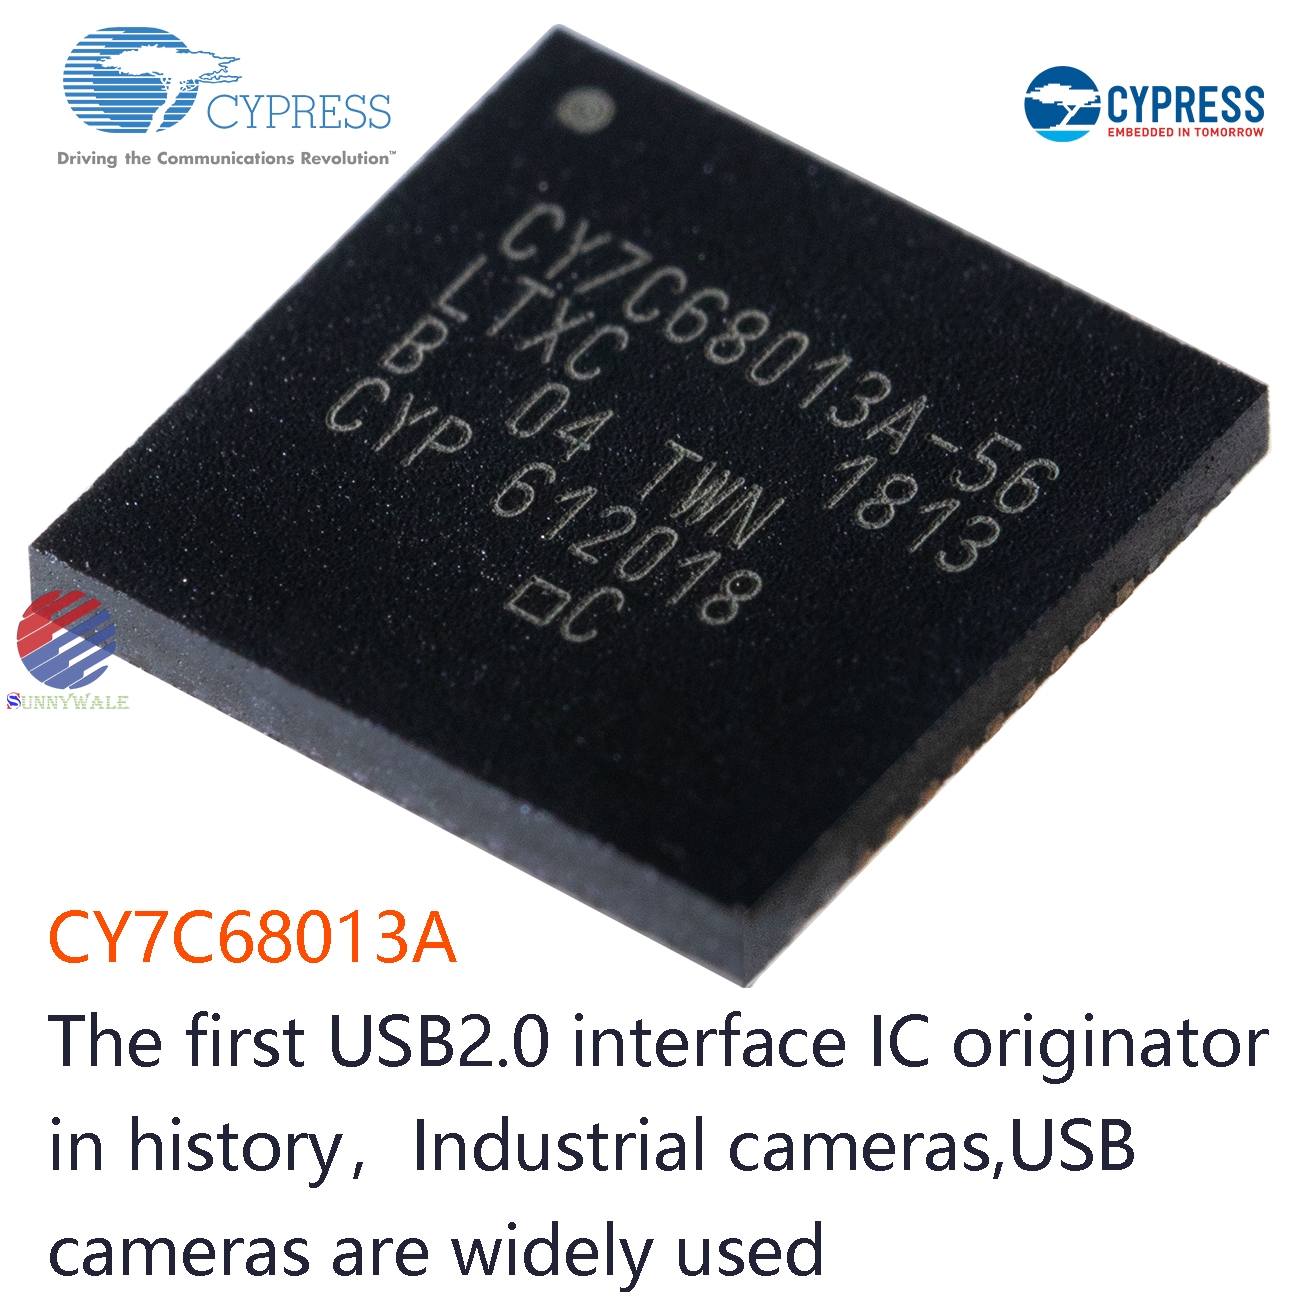 CY7C68013, Cypress, EZ-USB FX2, USB2.0 interface IC, USB camera IC, industrial camera USB microcontroller